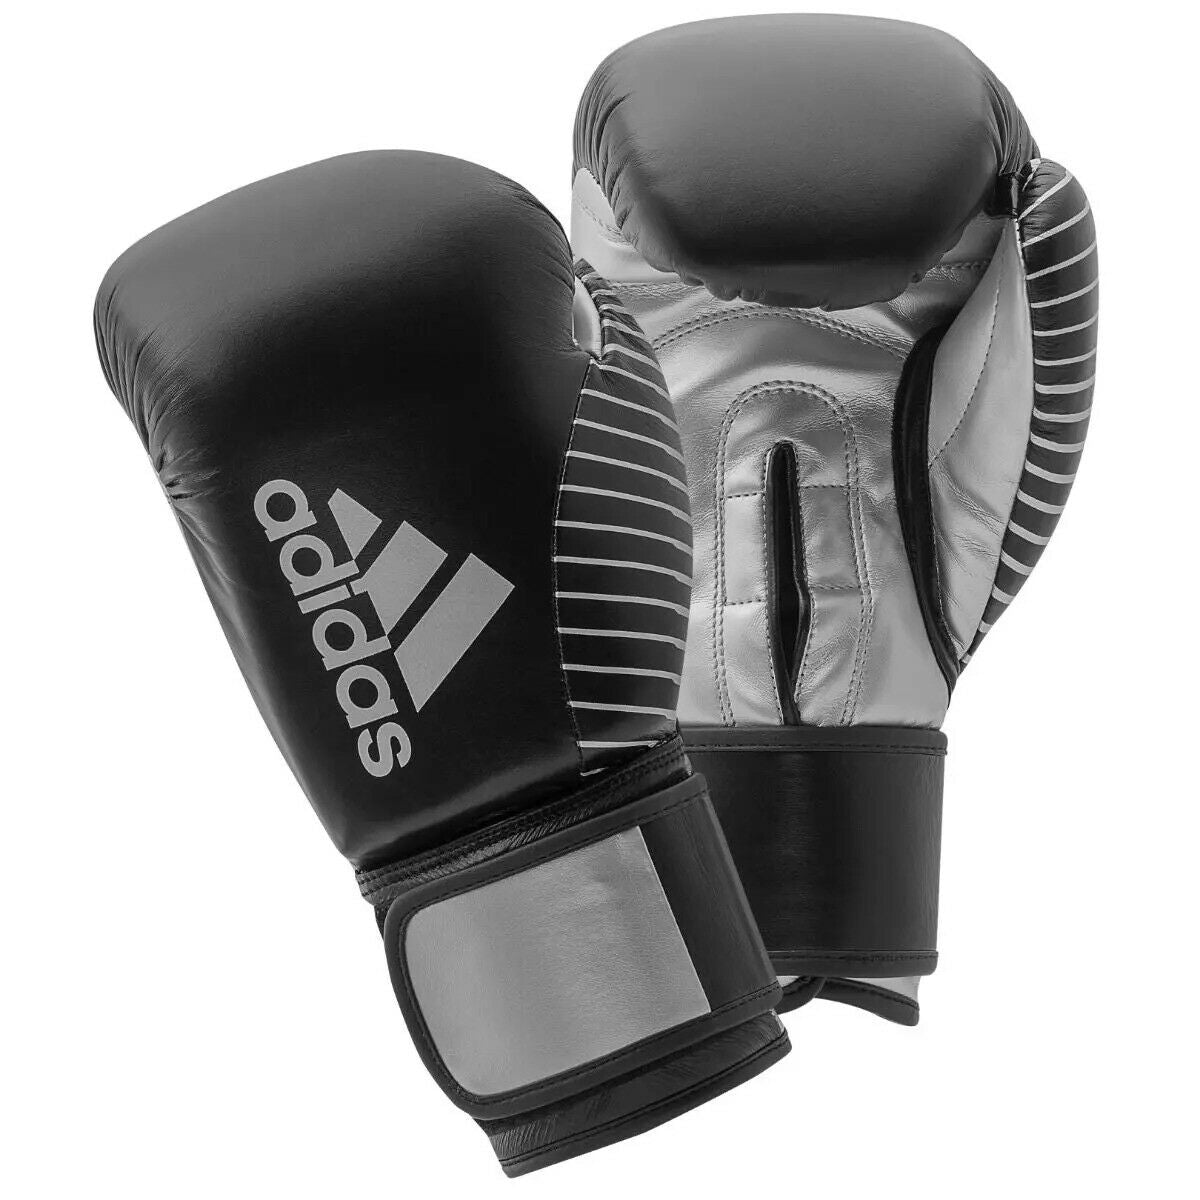 adidas Kickboxing Gloves Leather Boxing 10 oz